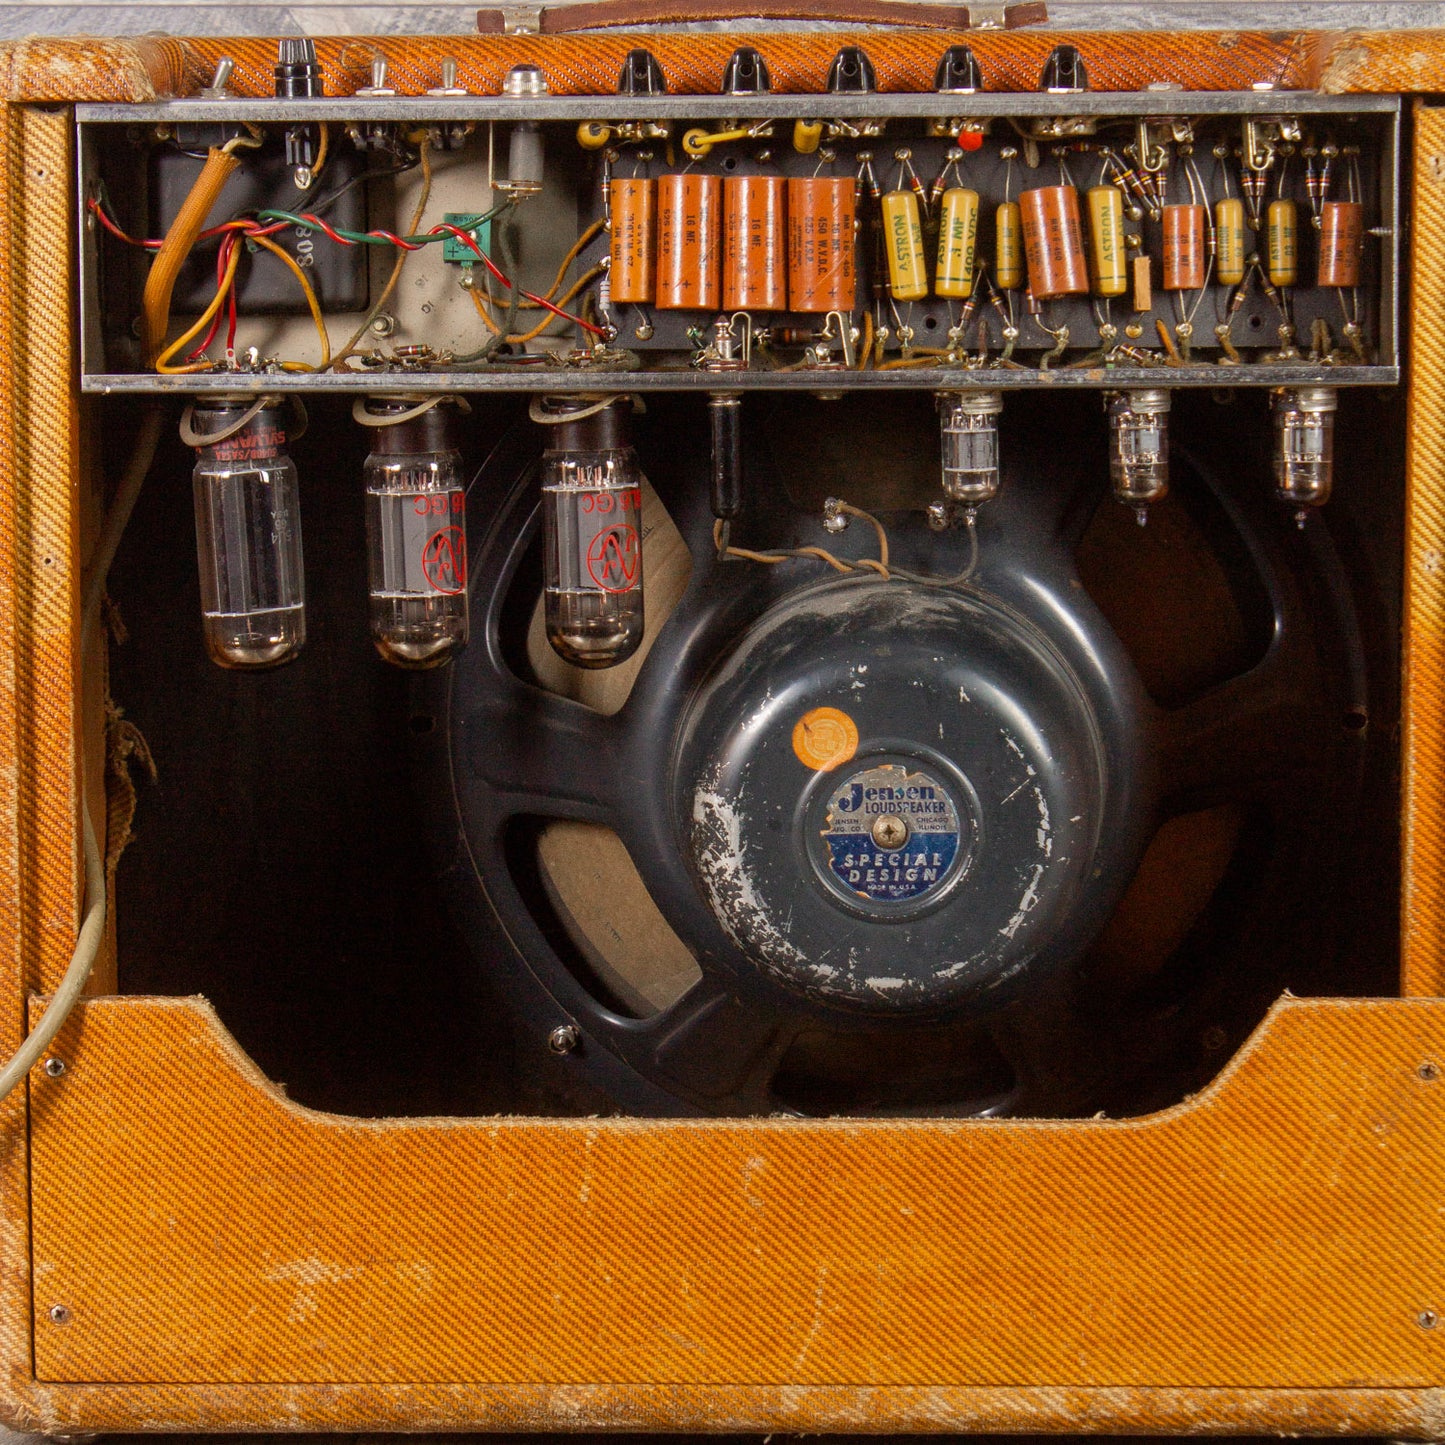 1959 Fender Pro Amp - Narrow Panel